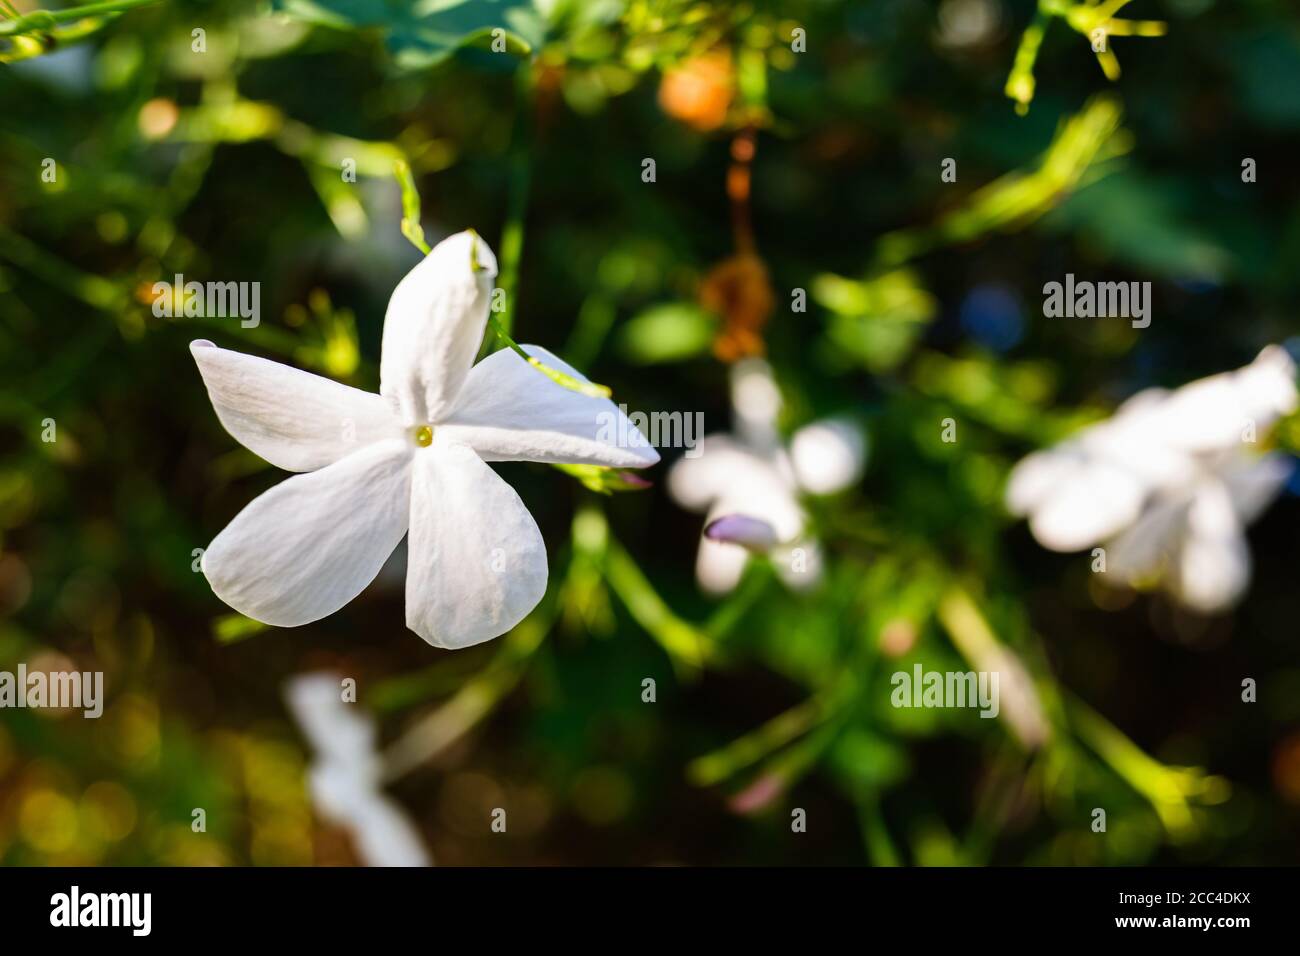 A white jasmine flower, Jasminum, blooming during the summer. Stock Photo